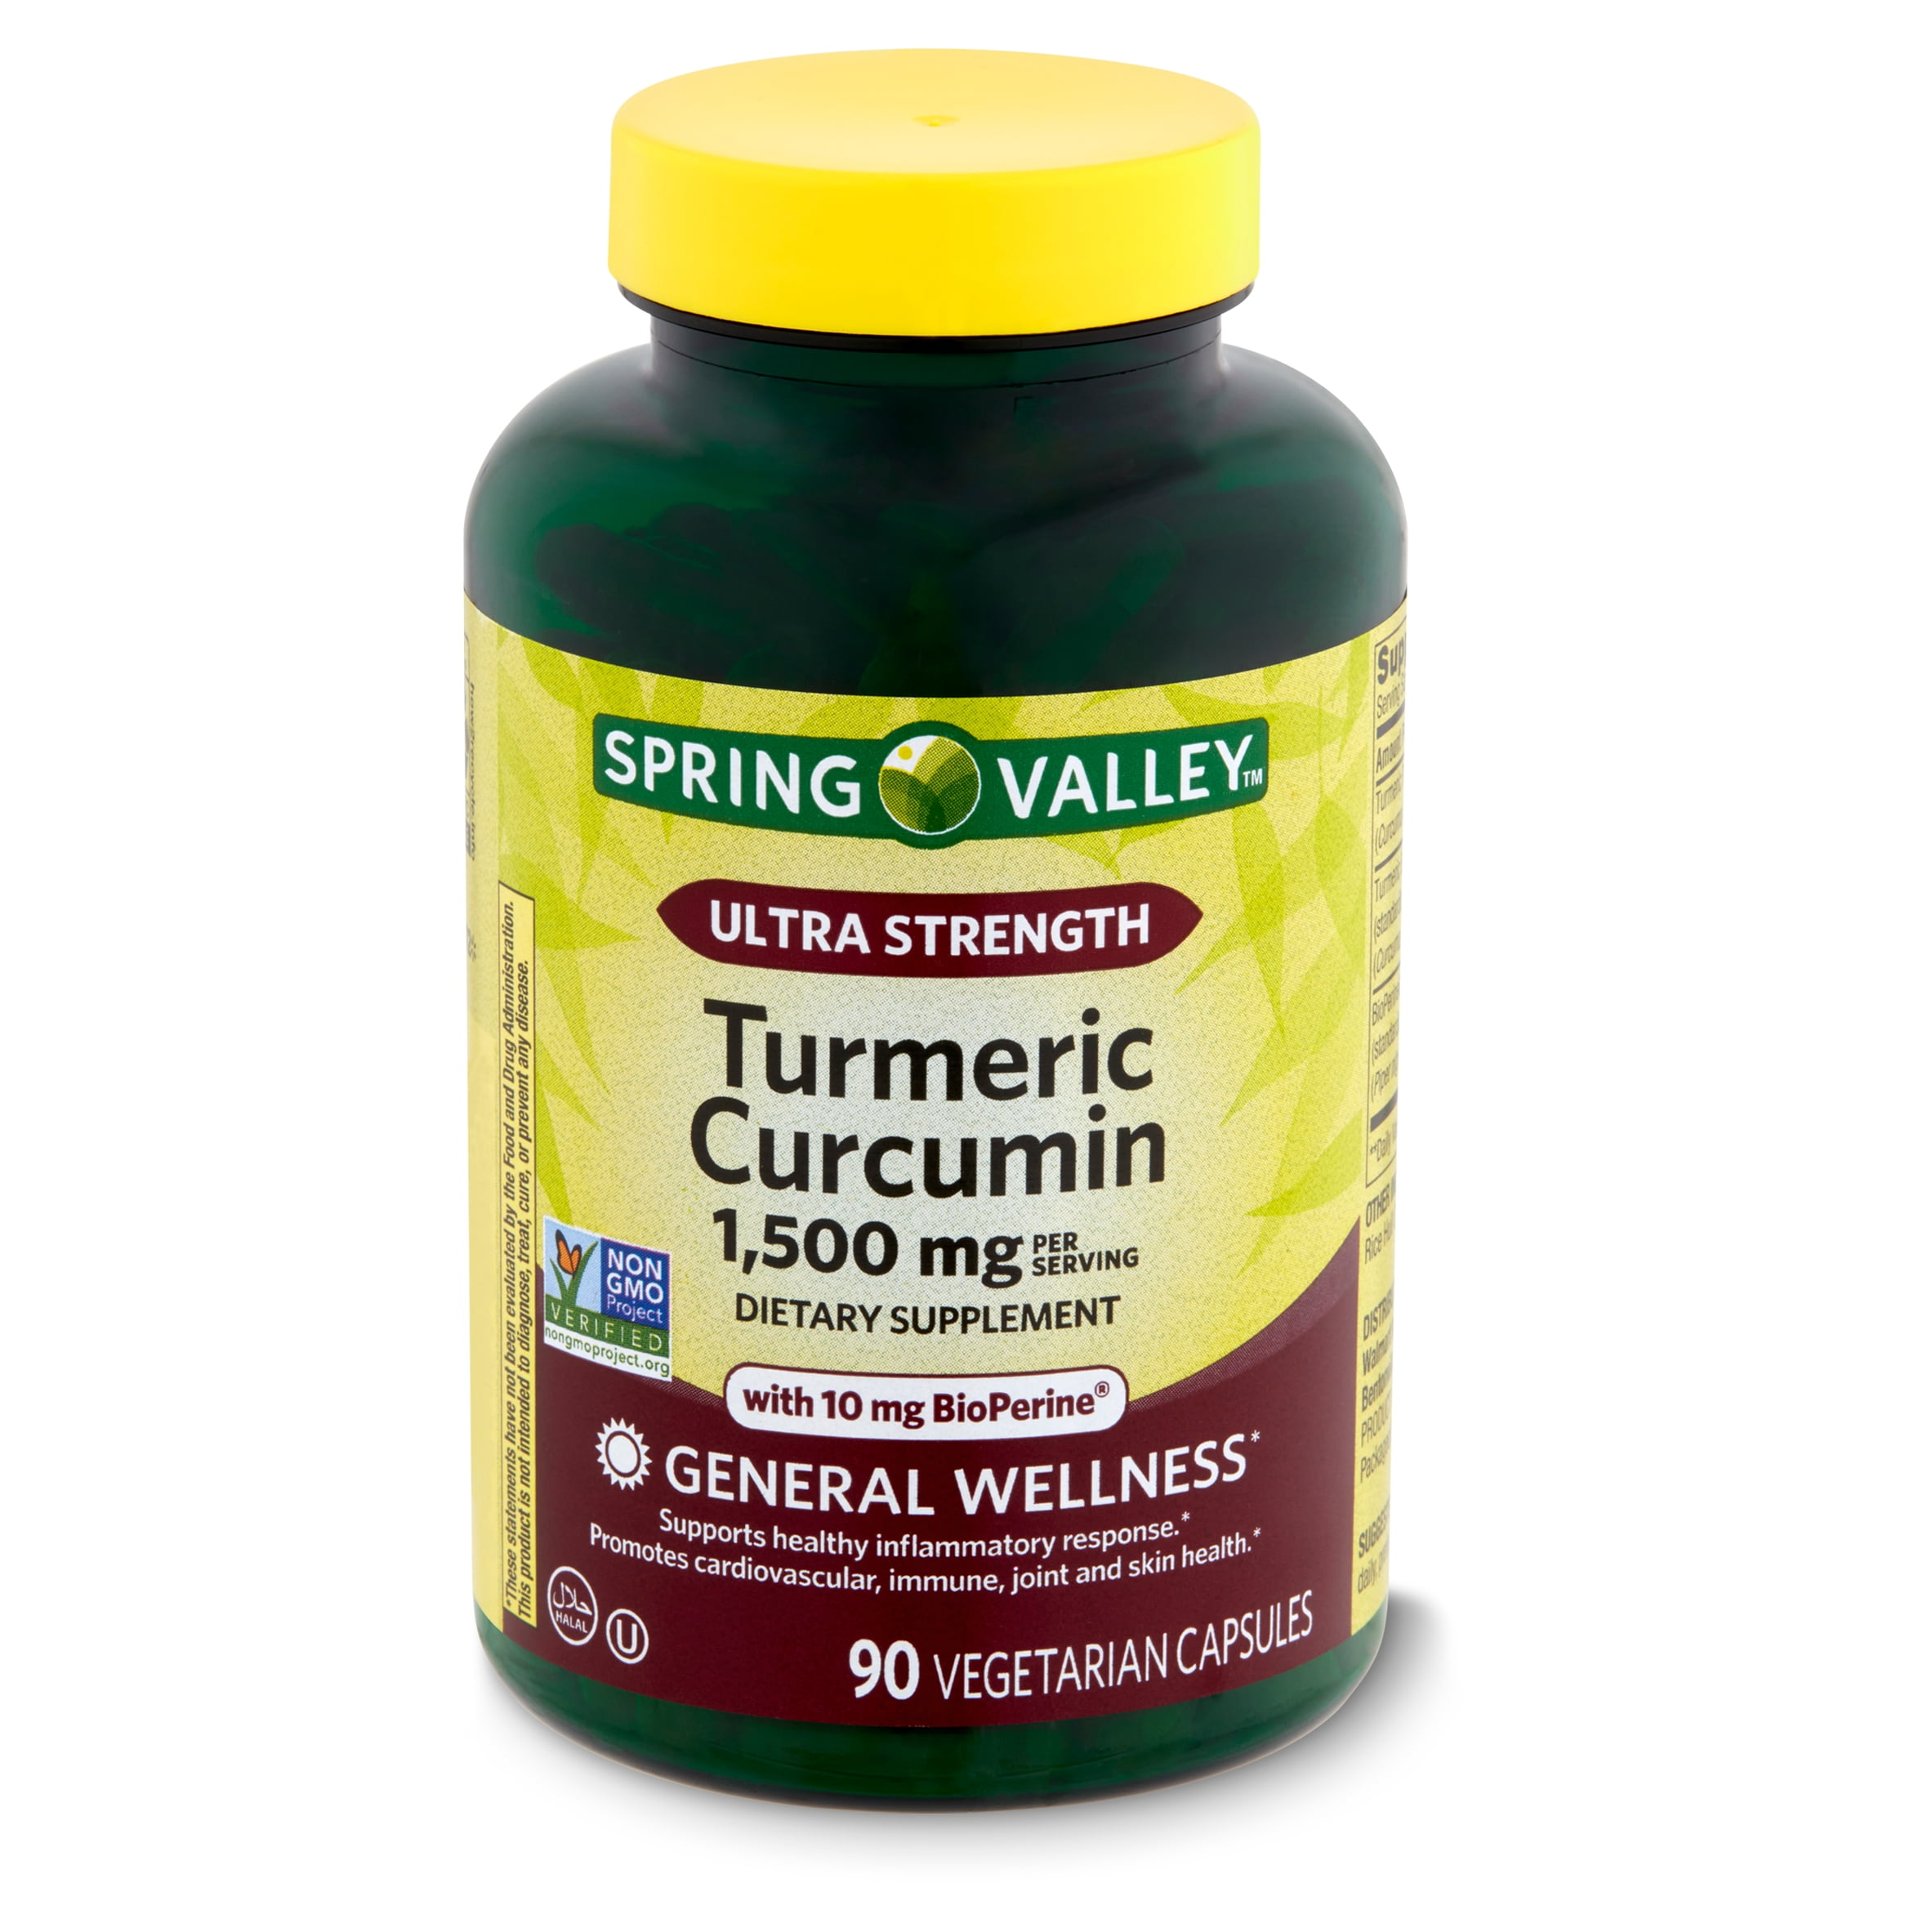 Spring Valley Ultra Strength Turmeric Curcumin Dietary Supplement ...